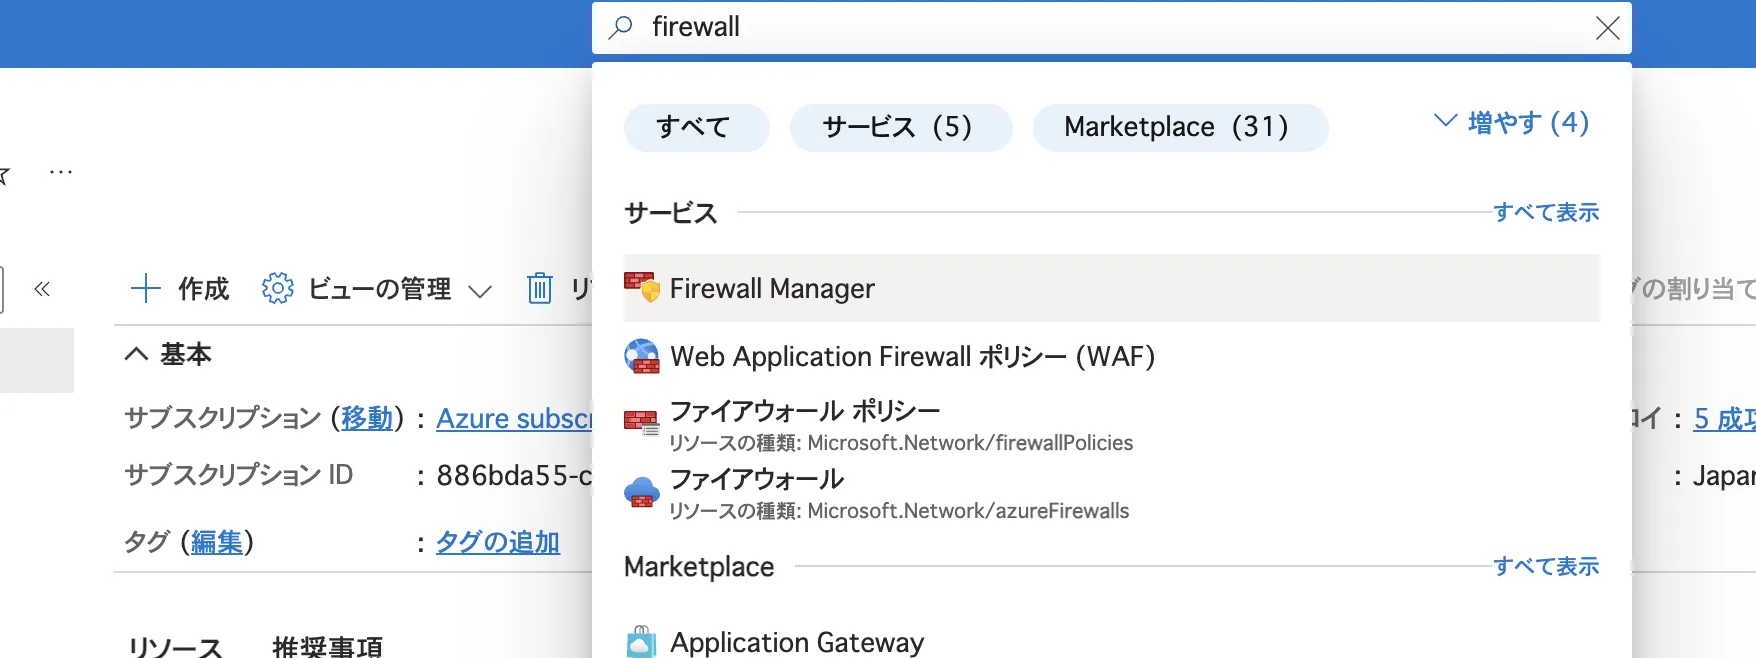 Firewall検索画面